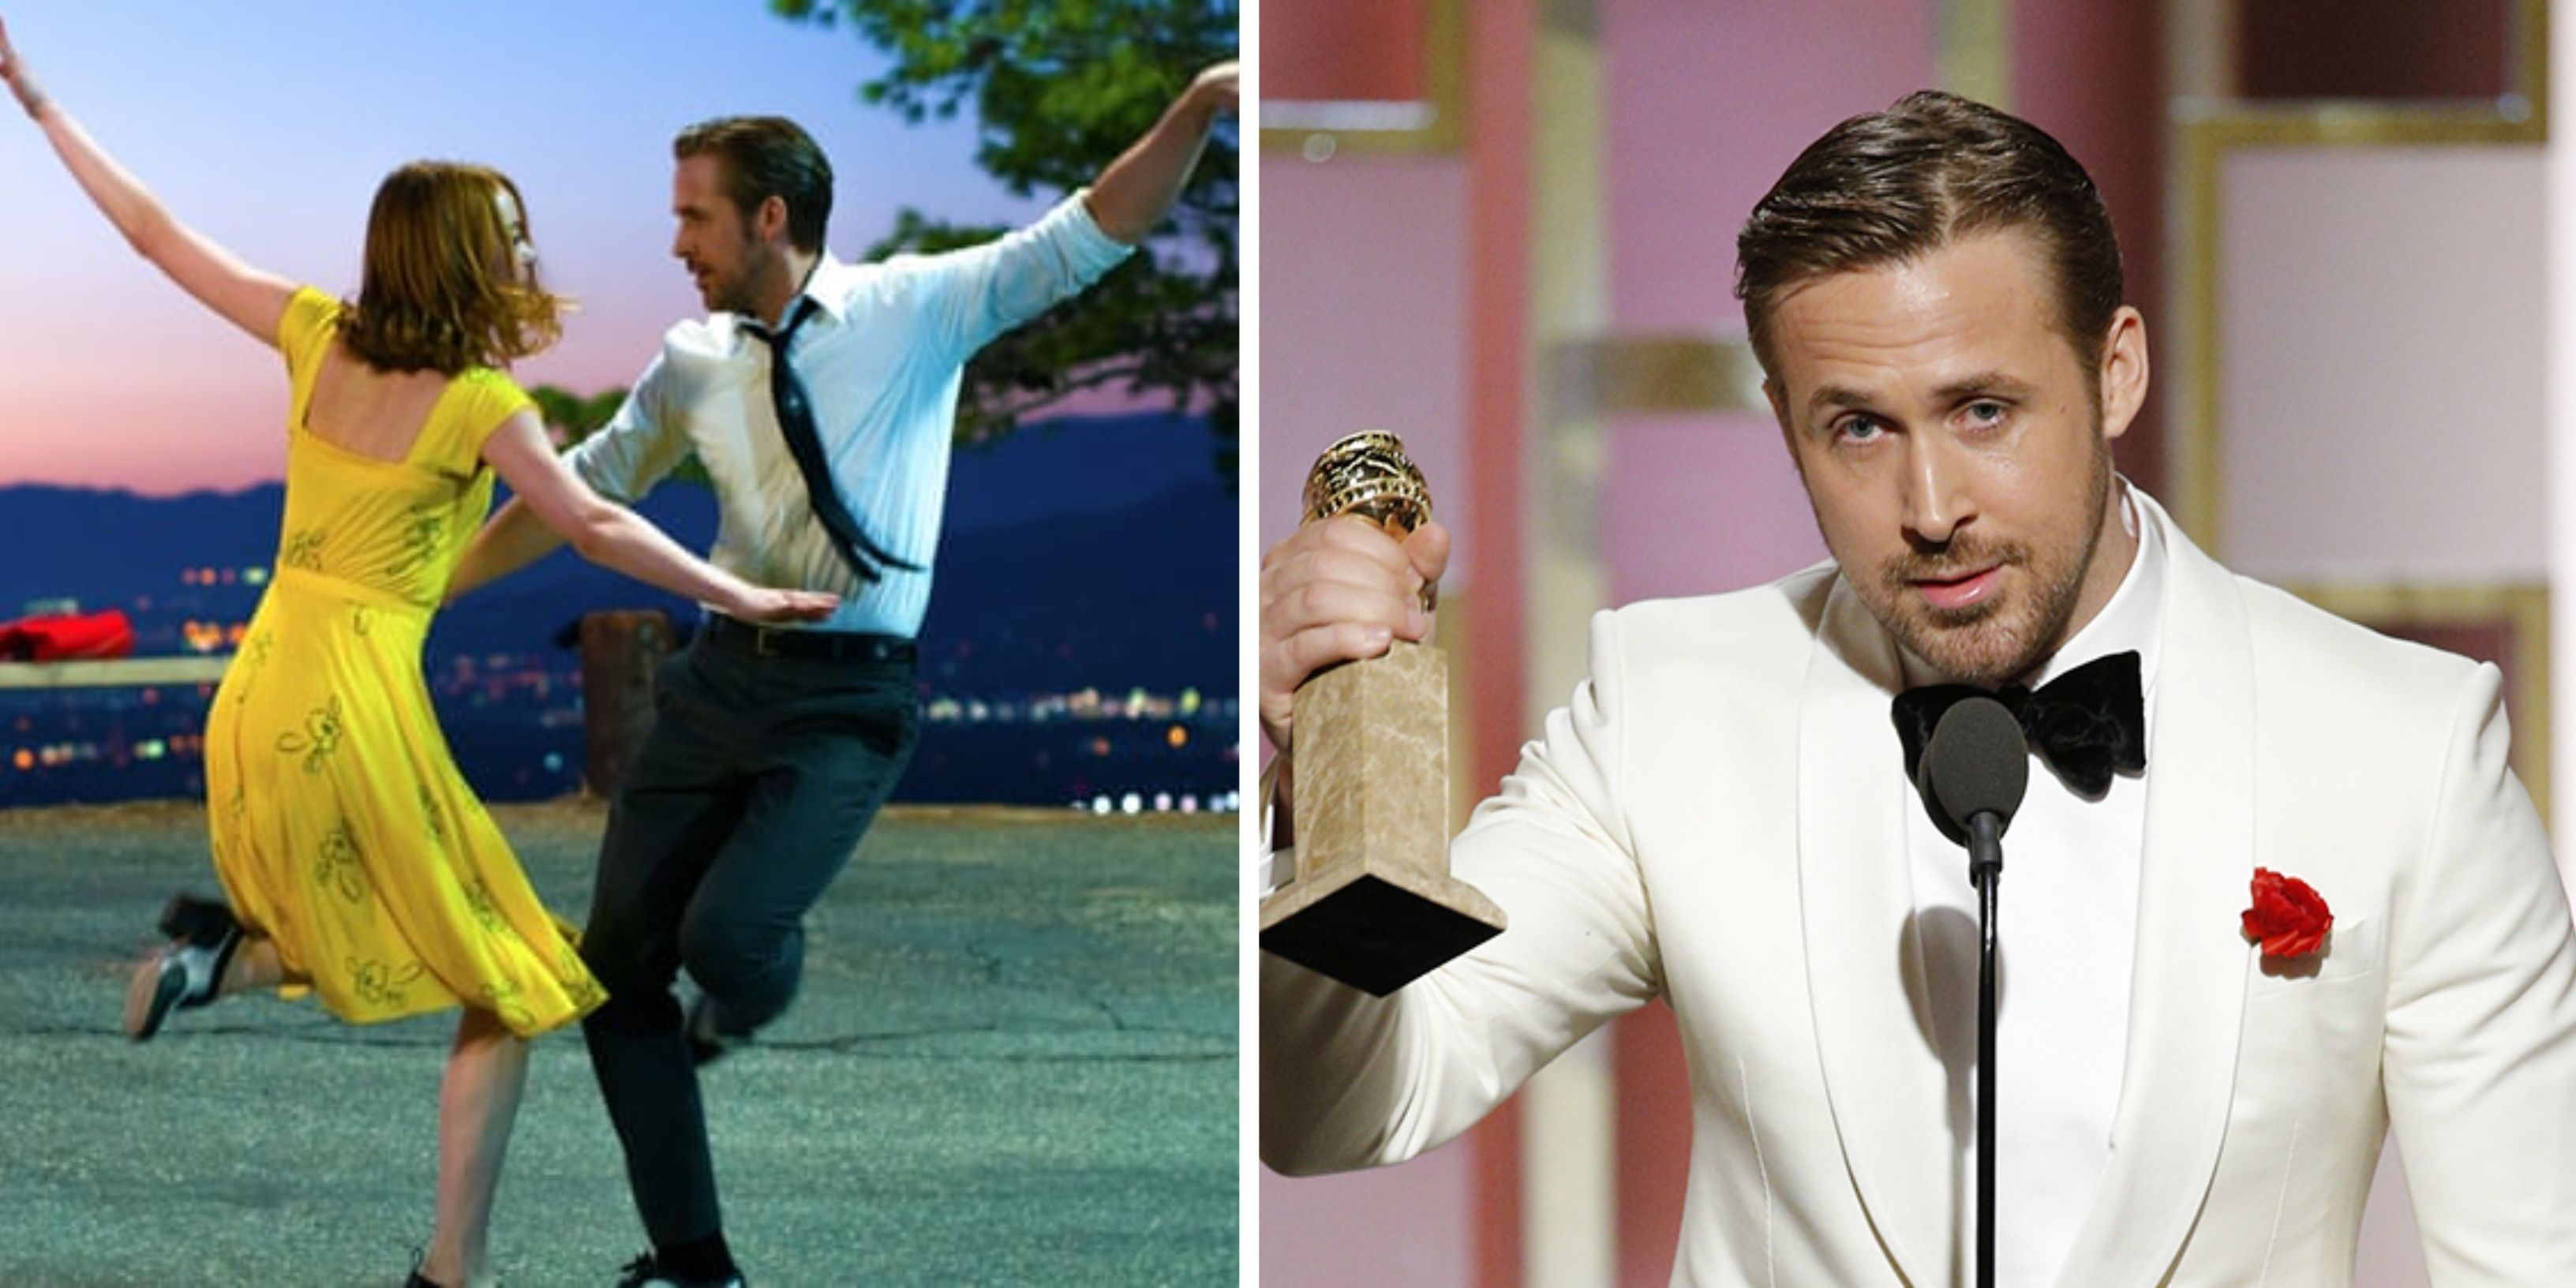 As maiores conquistas de Ryan Gosling desde ‘The Notebook’